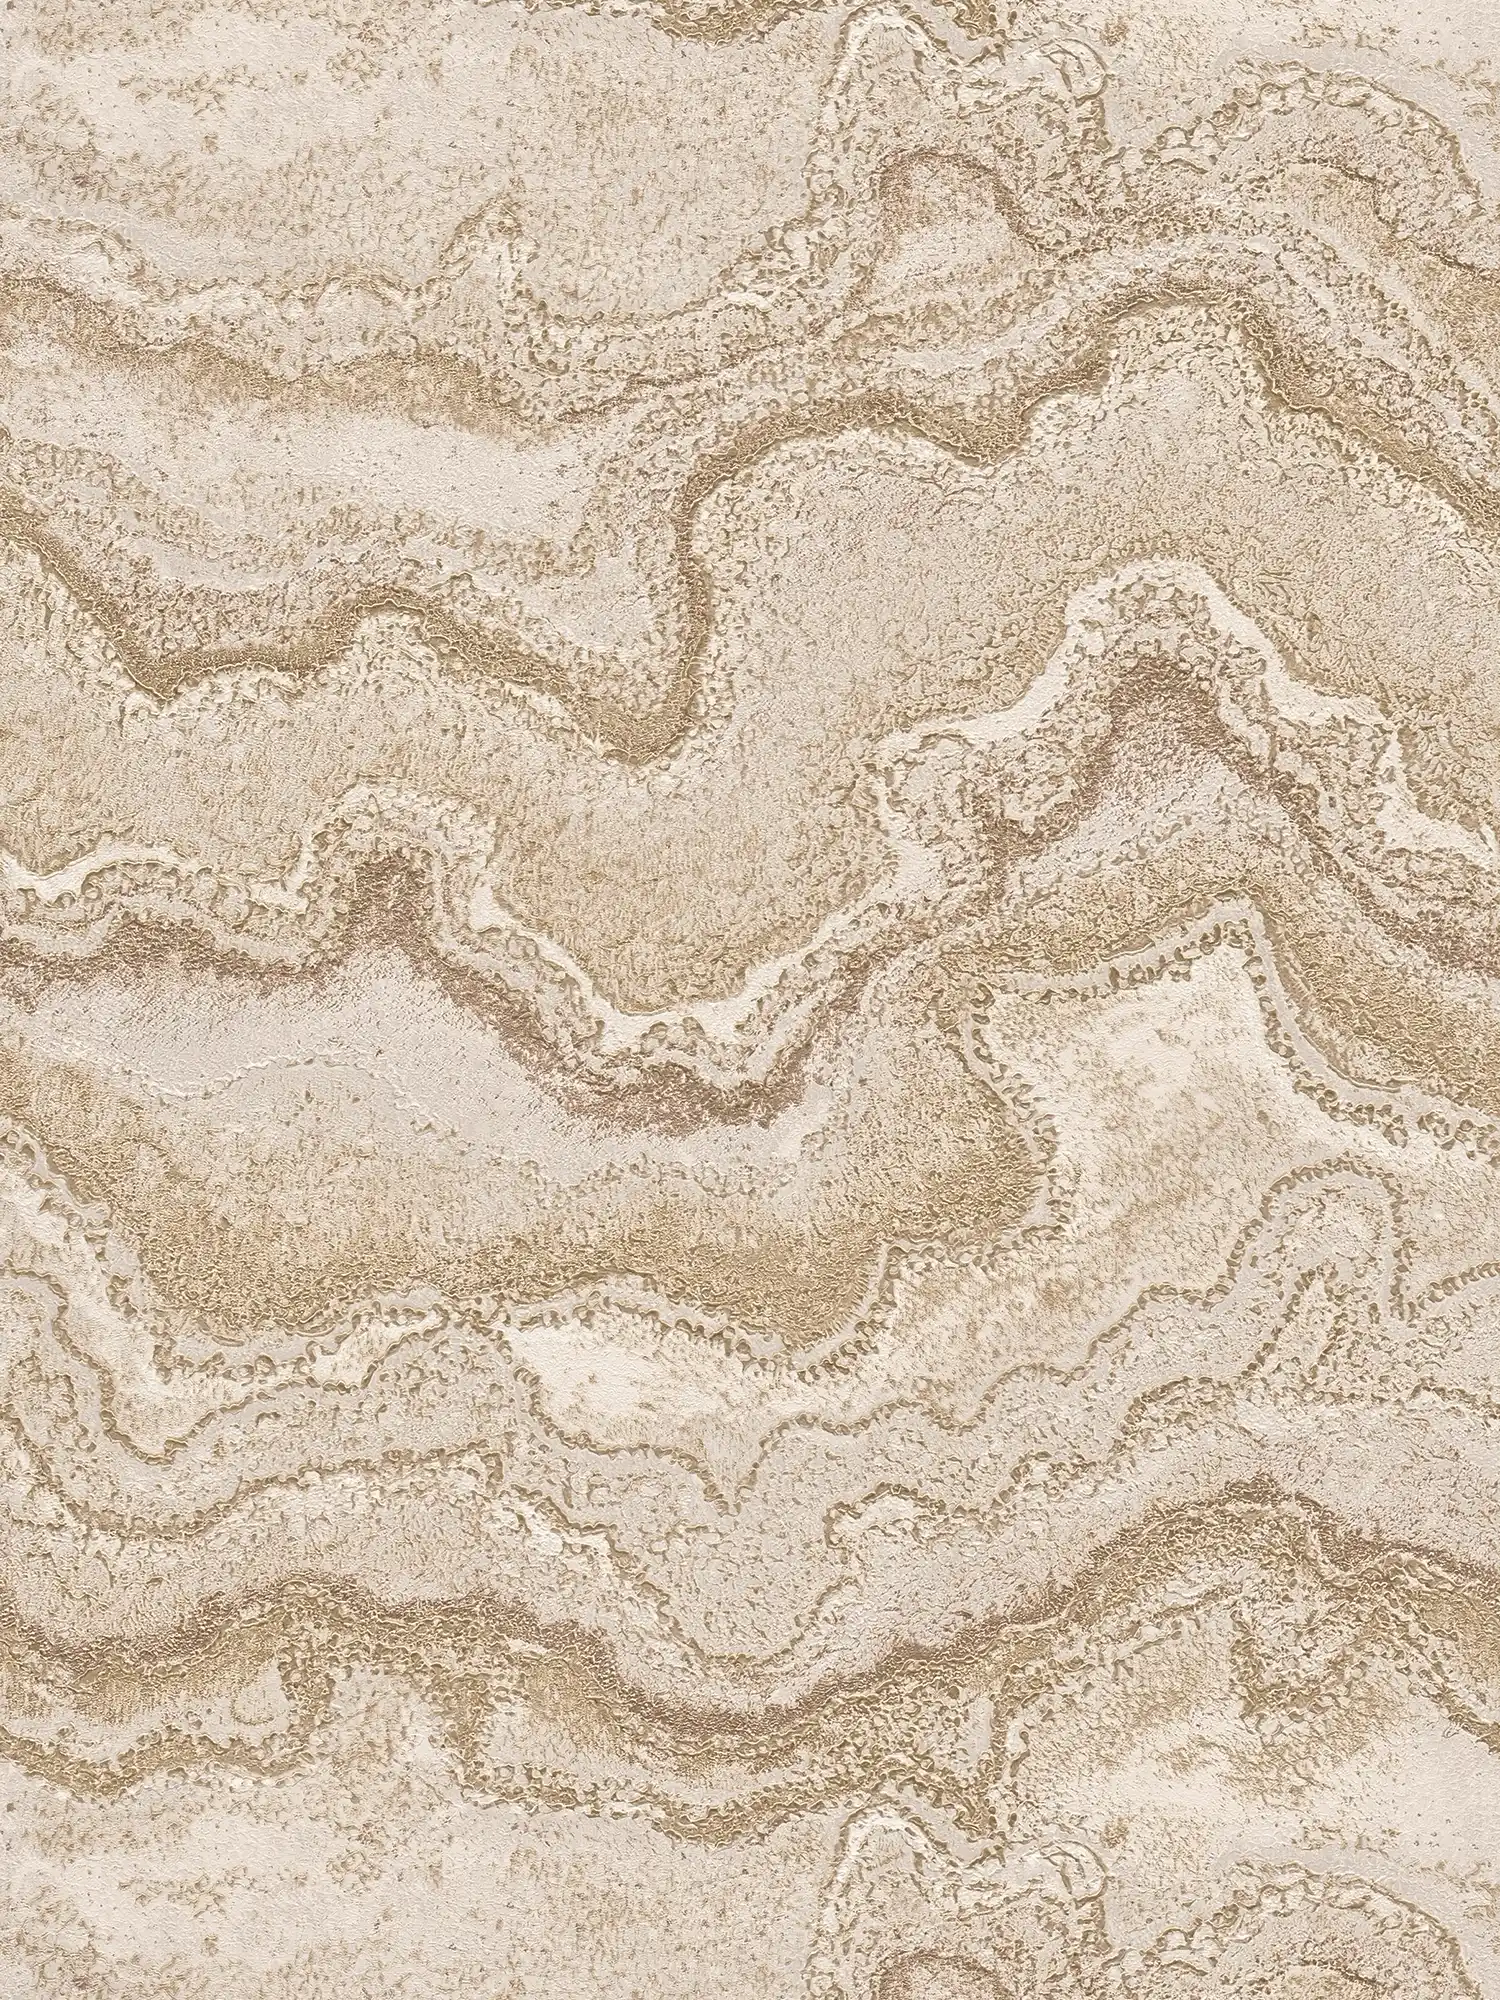 Papel pintado tejido-no tejido jaspeado con textura - gris, dorado
